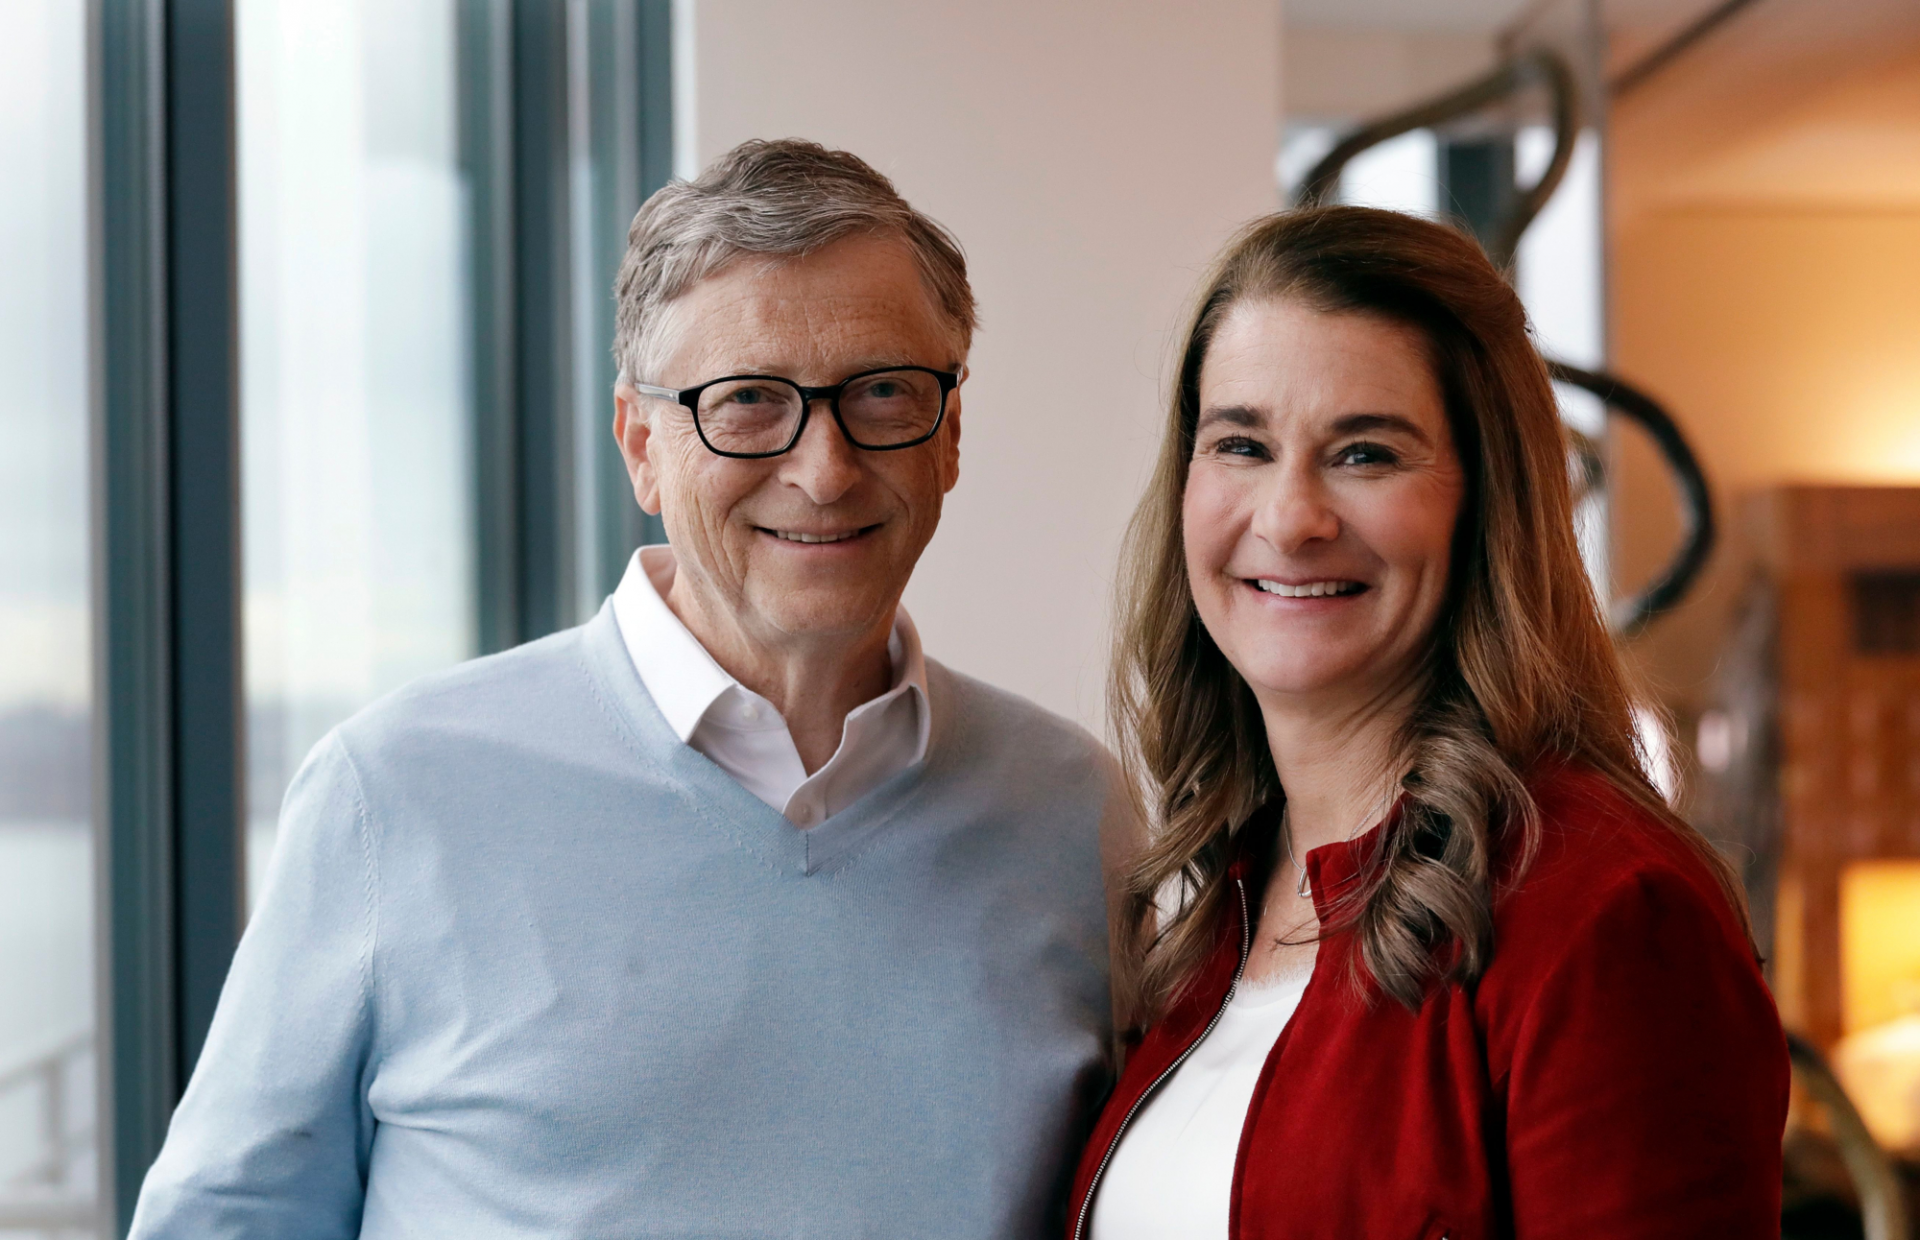 Bill and Melinda Gates| CREDIT: ELAINE THOMPSON/AP/SHUTTERSTOCK